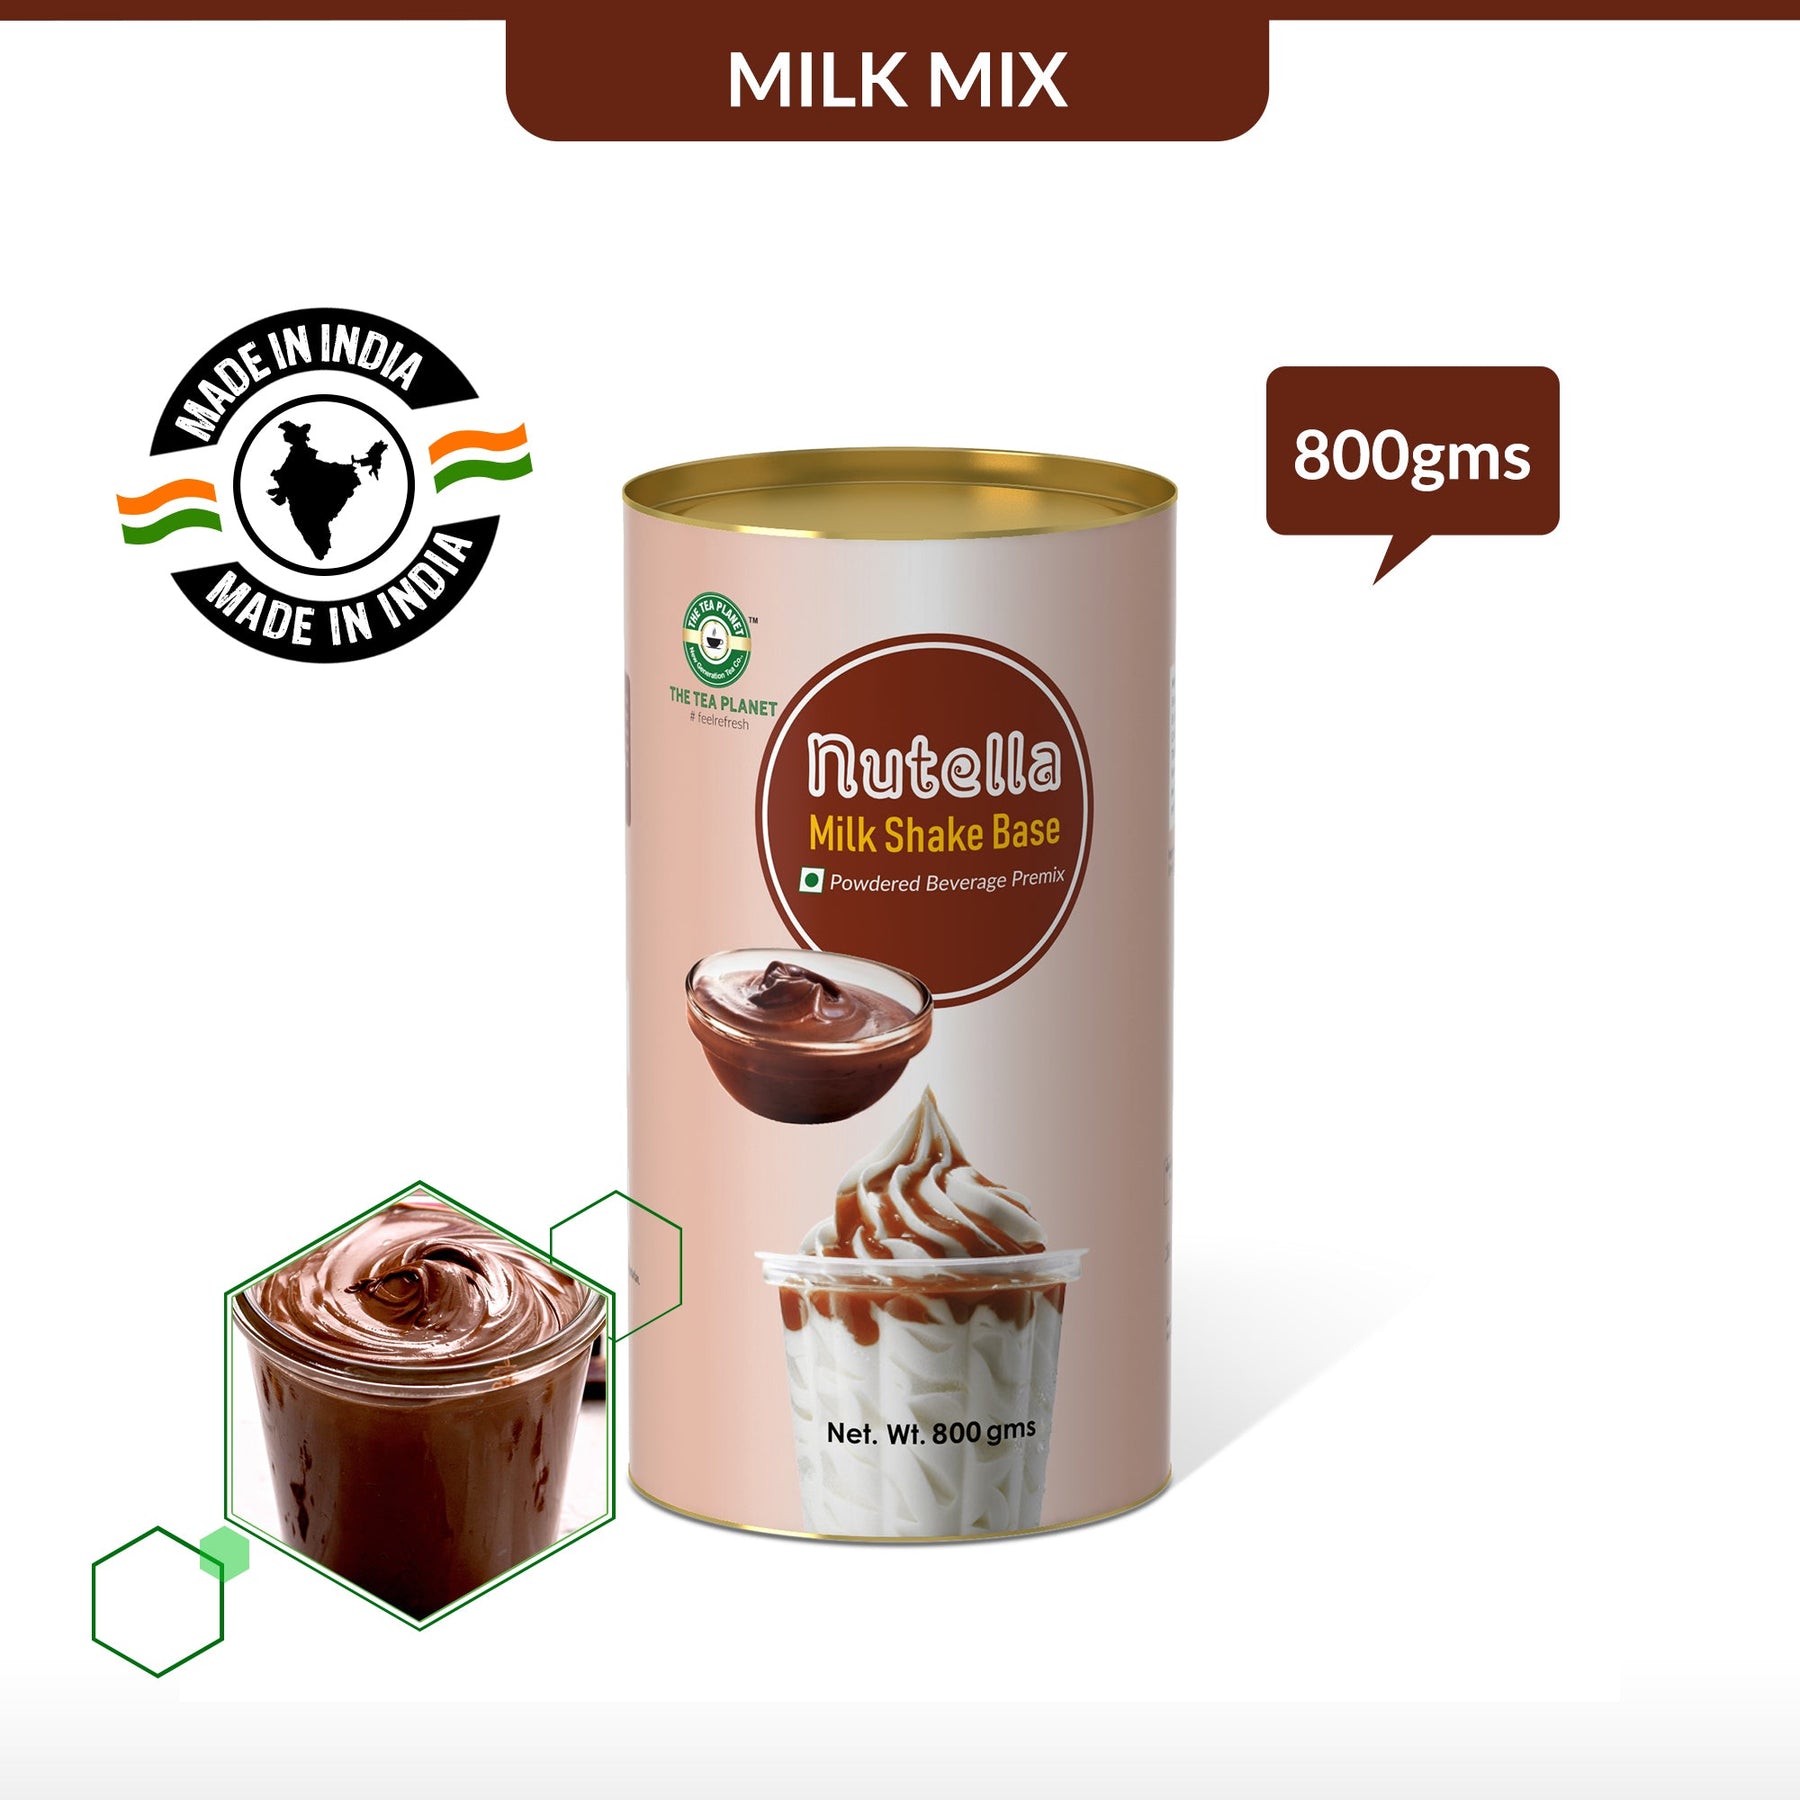 Nutella Thick Milkshake Mix - 250 gms